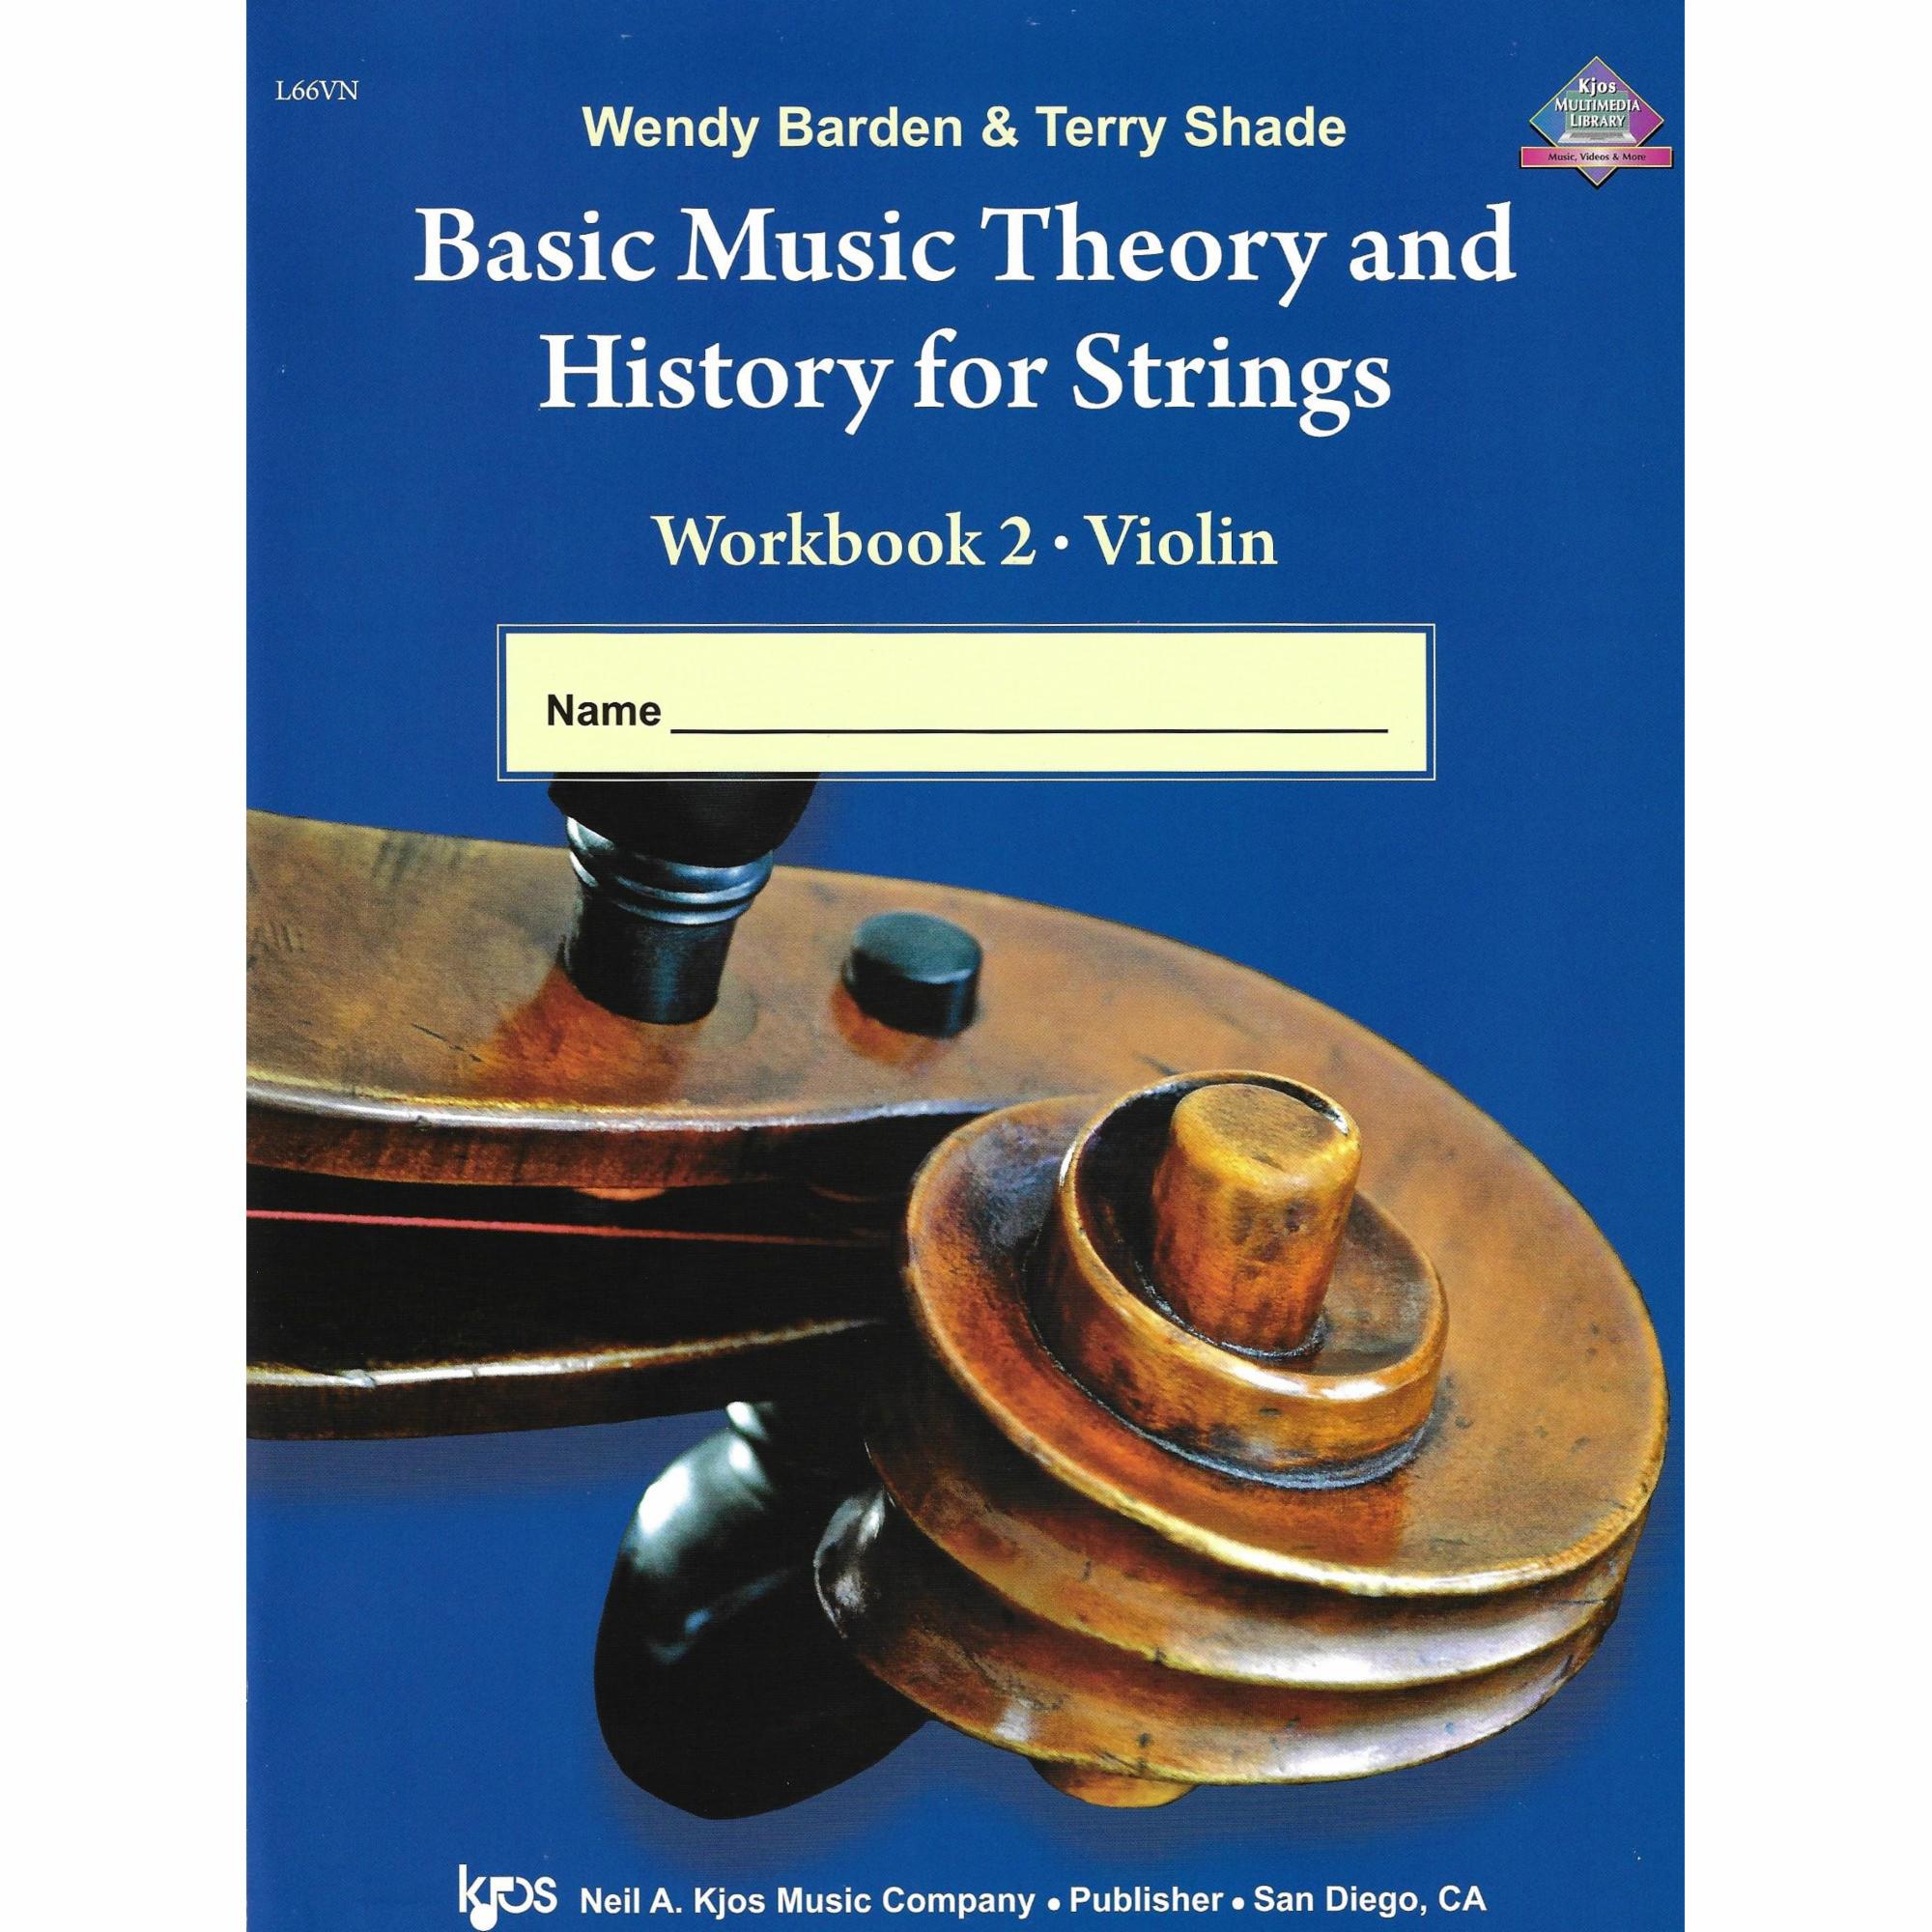 Basic Music Theory and History, Workbook 2